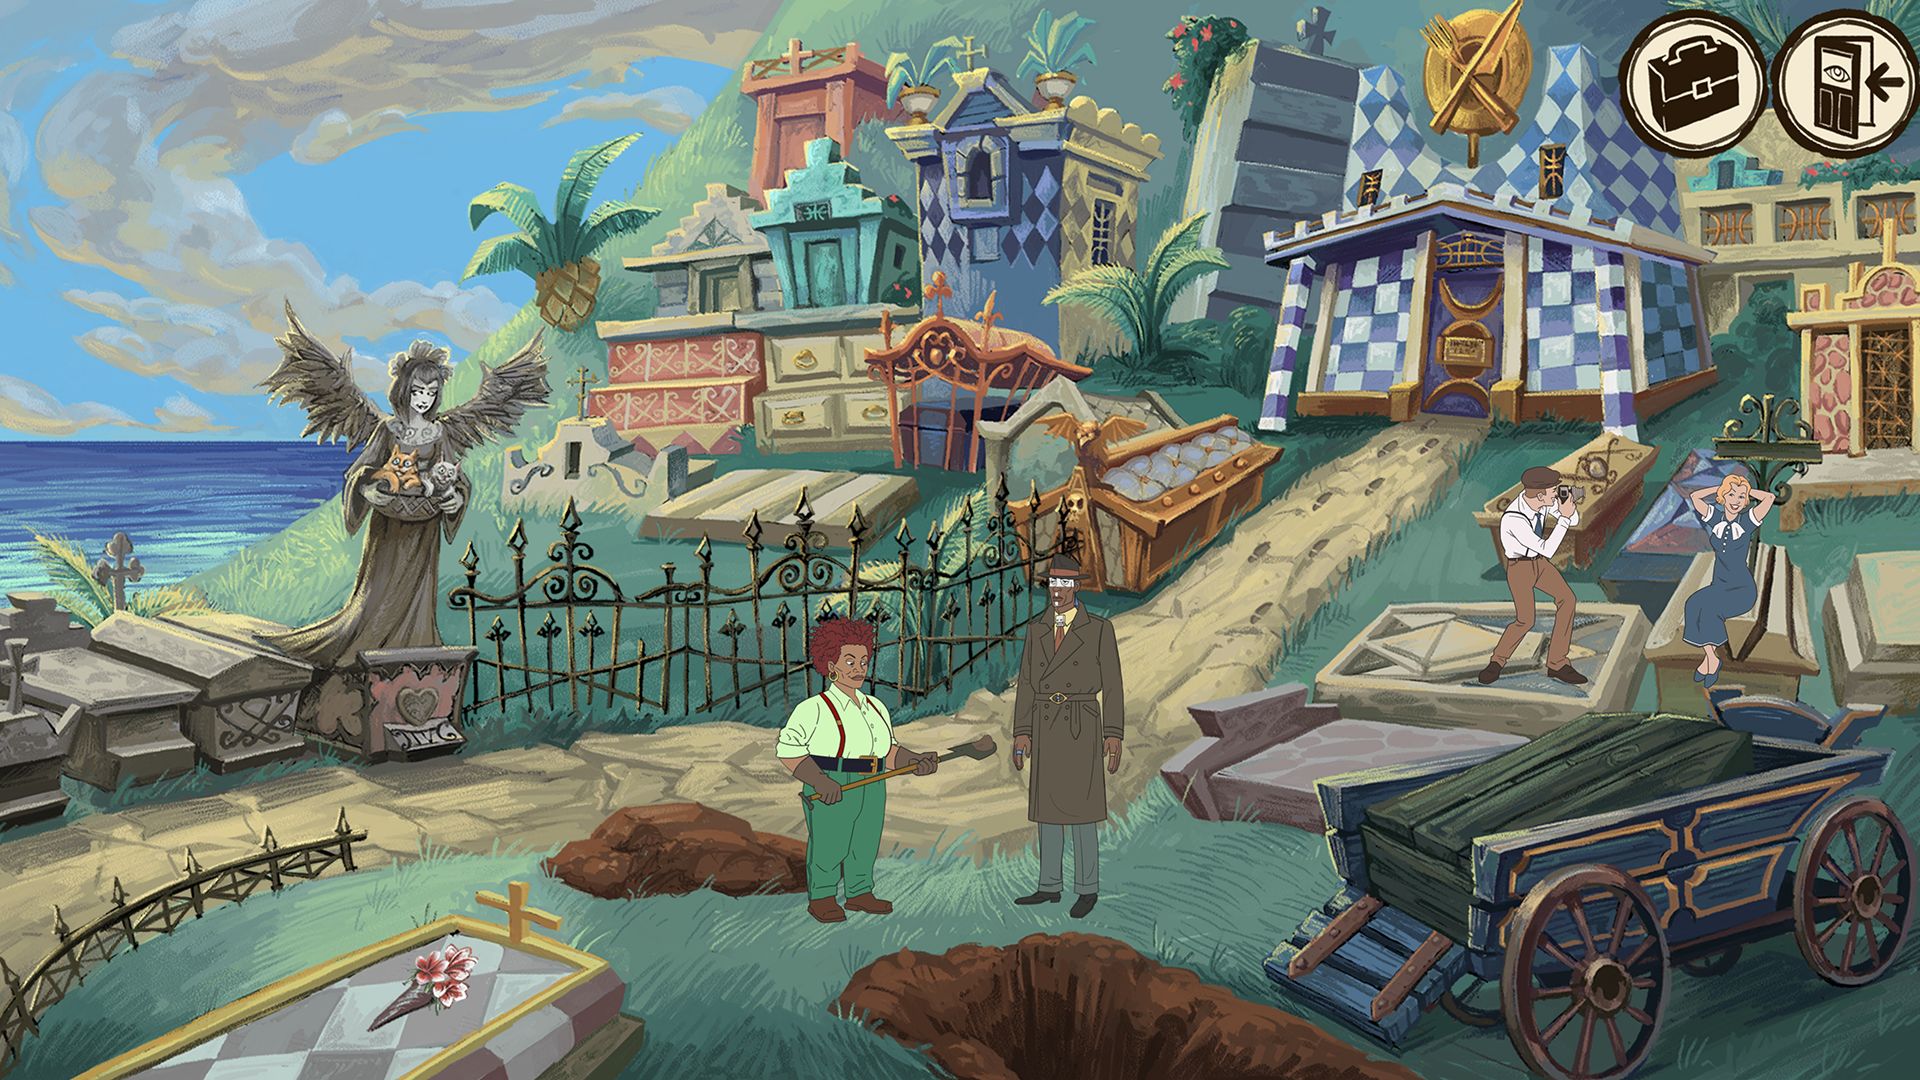 Voodoo Detective - Android game screenshots.